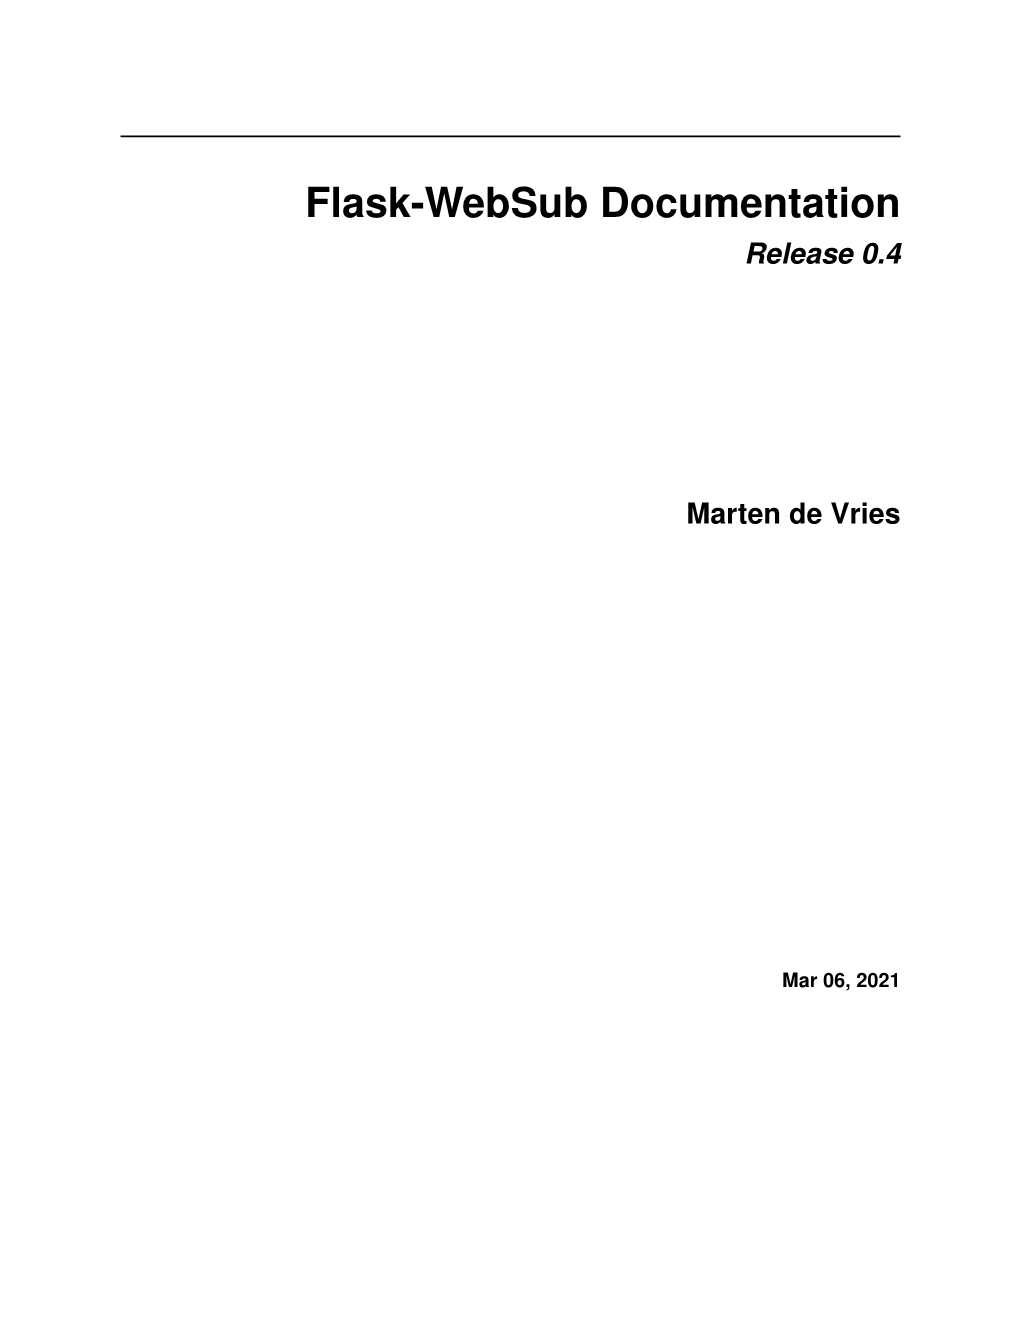 Flask-Websub Documentation Release 0.4